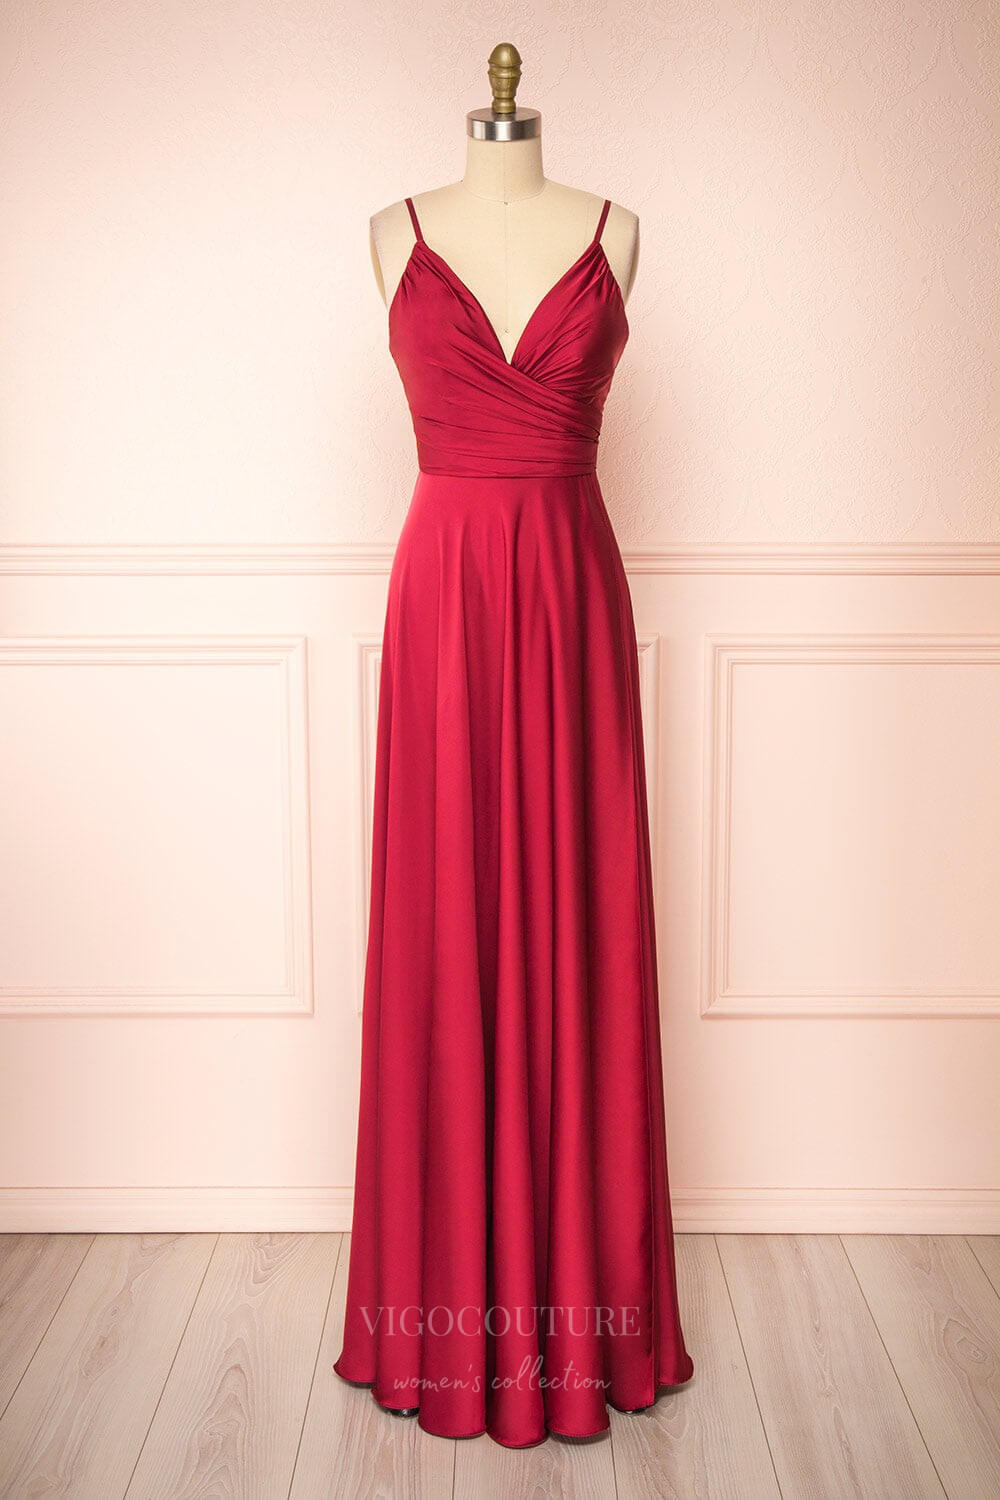 vigocouture-Stretchable Woven Spaghetti Strap Pleated Prom Dress 20858-Prom Dresses-vigocouture-Red-US2-